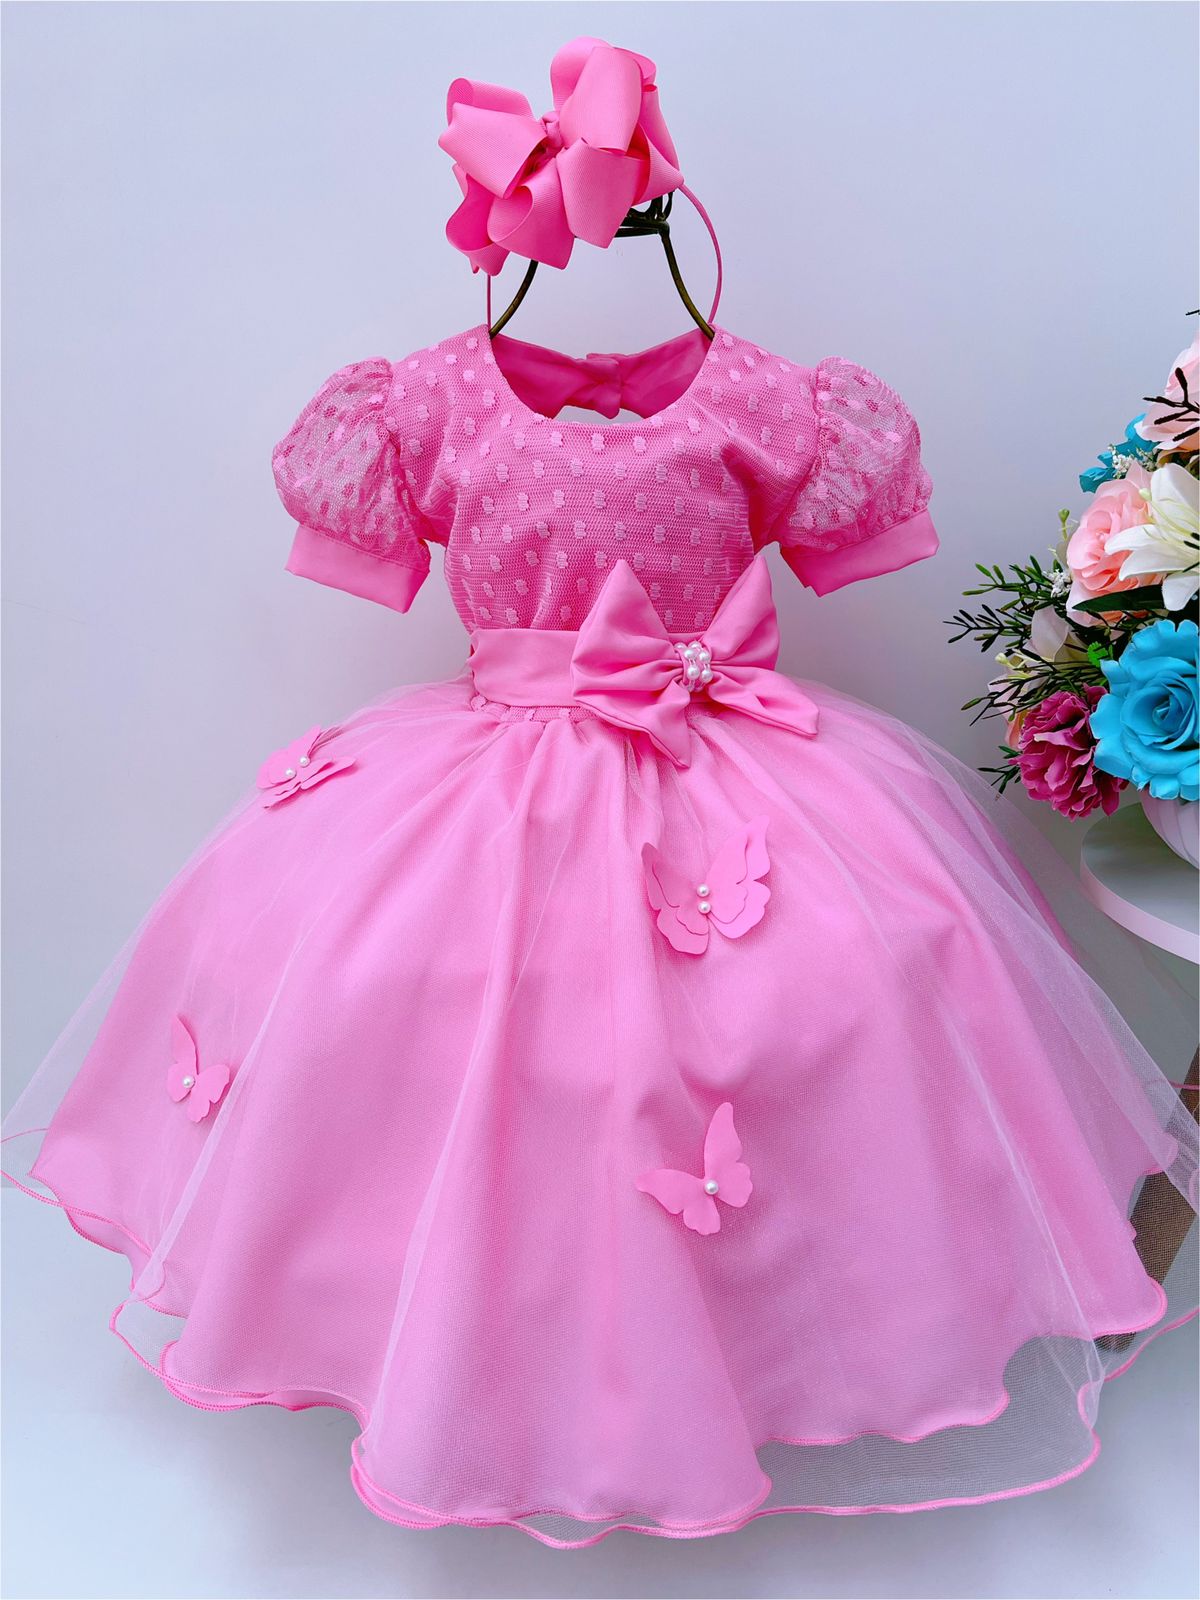 Vestido Infantil Rosa Chiclete C/ Borboletas Pérolas